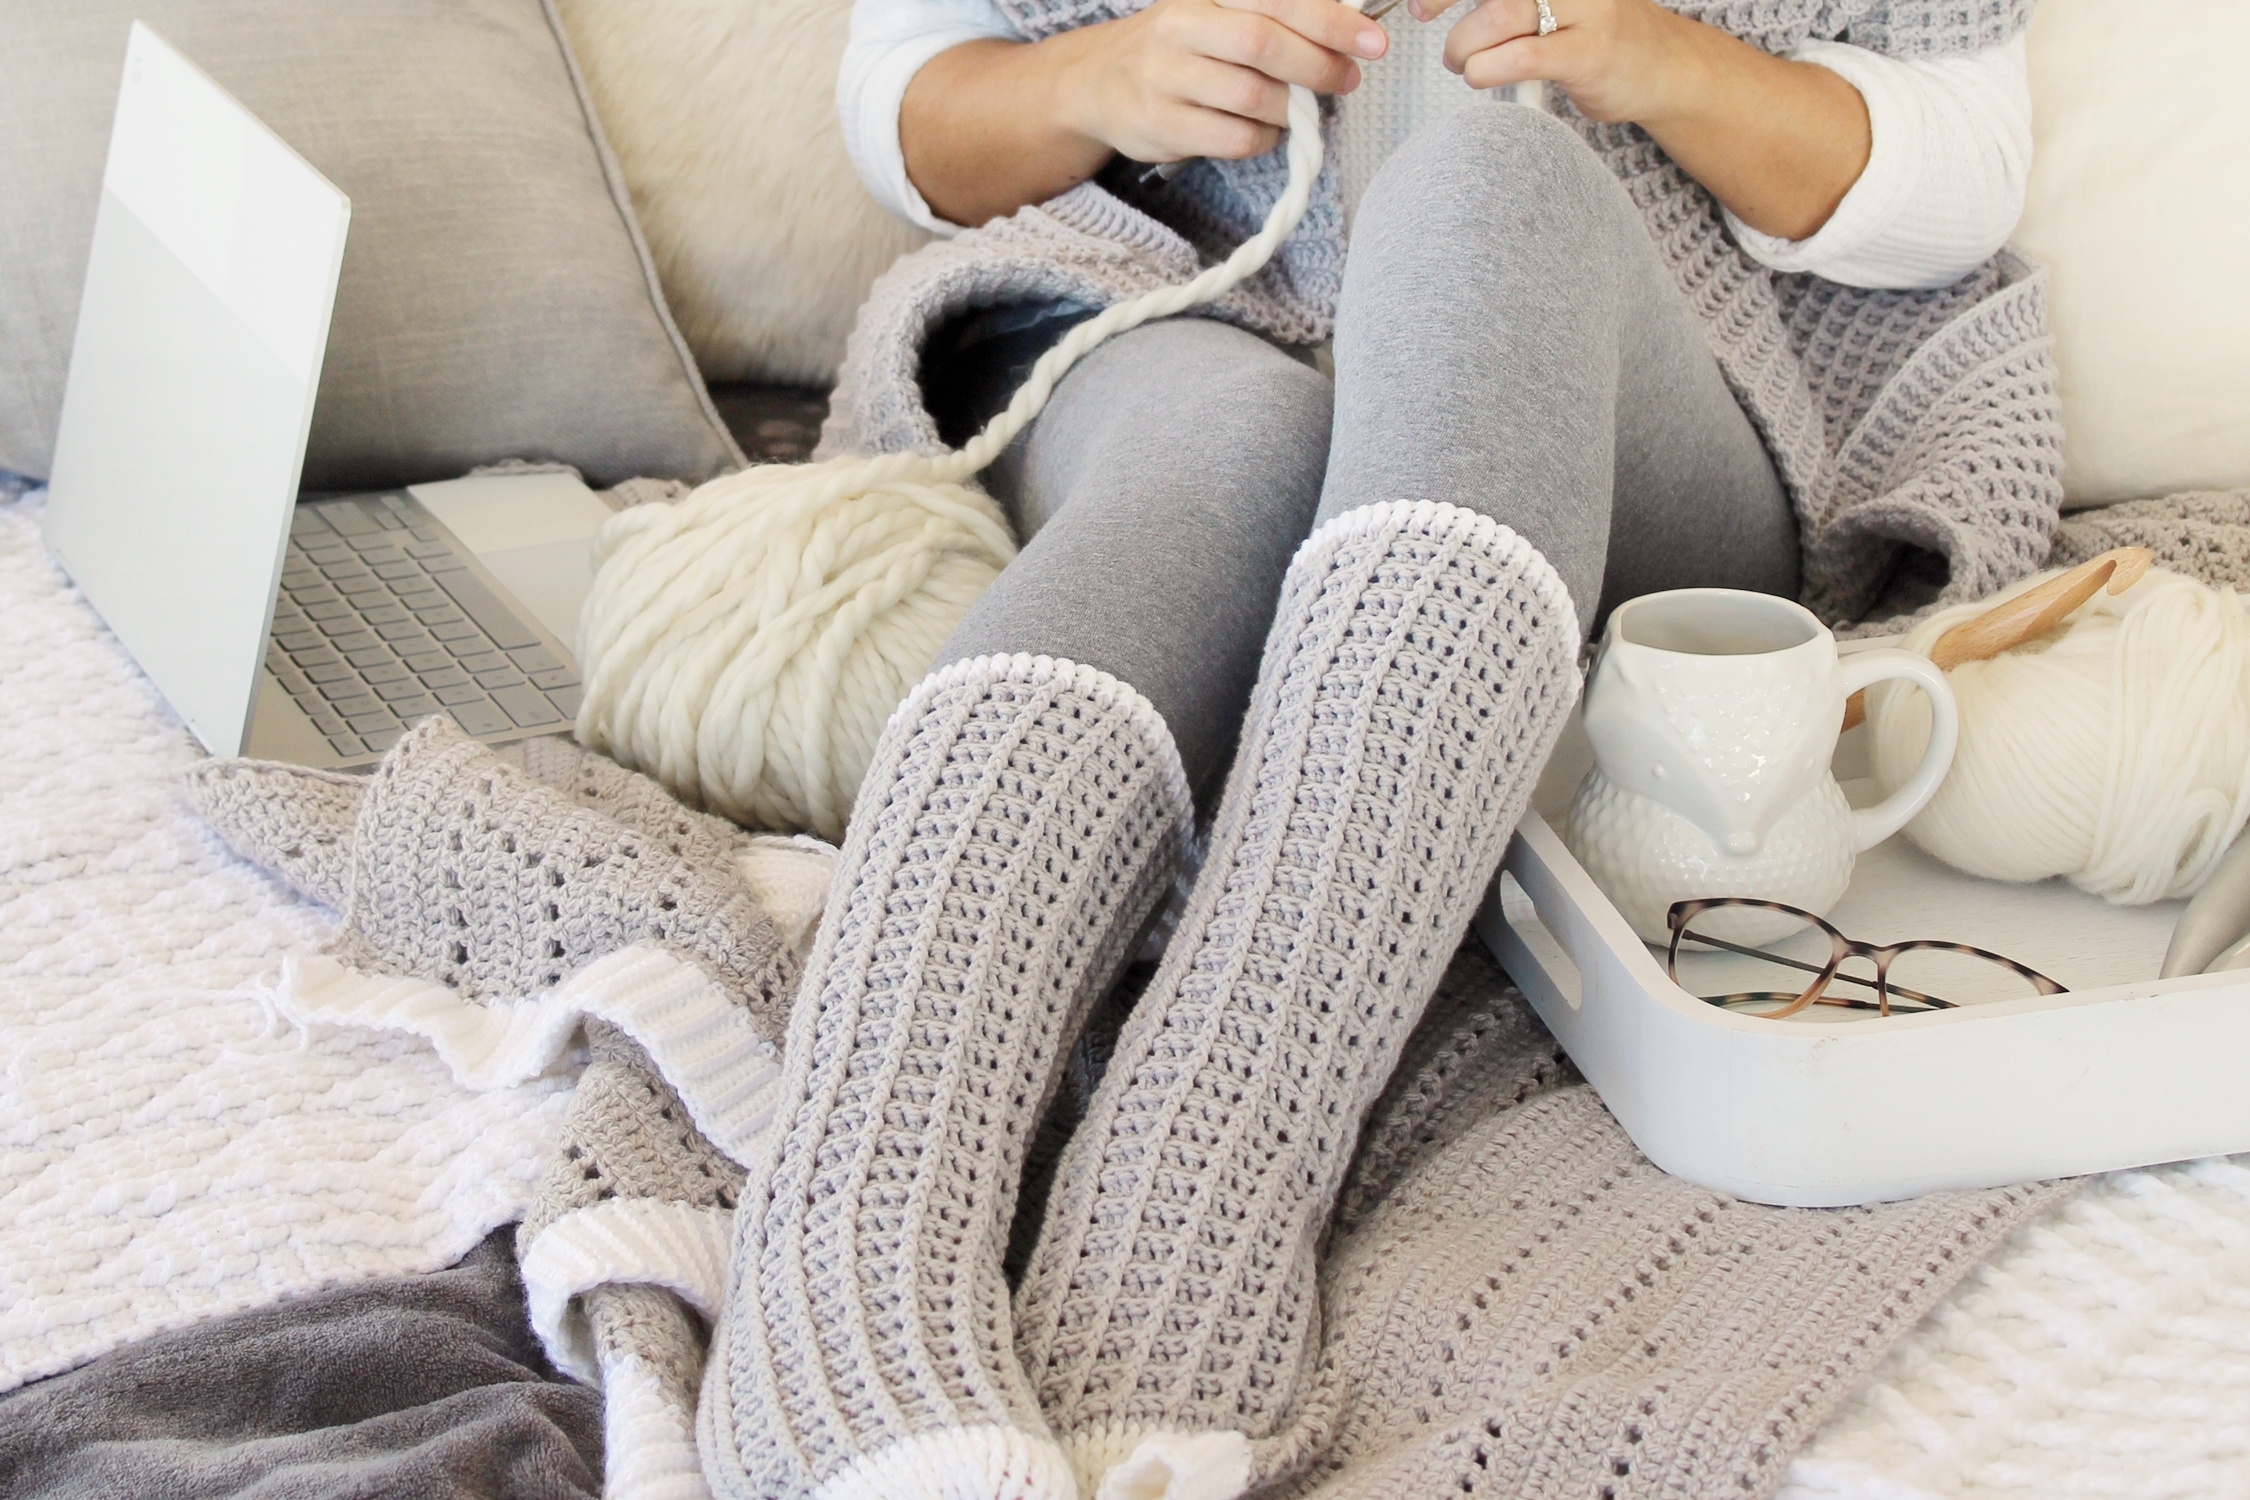 How to Crochet Socks + 5 FREE Crocheted Sock Patterns